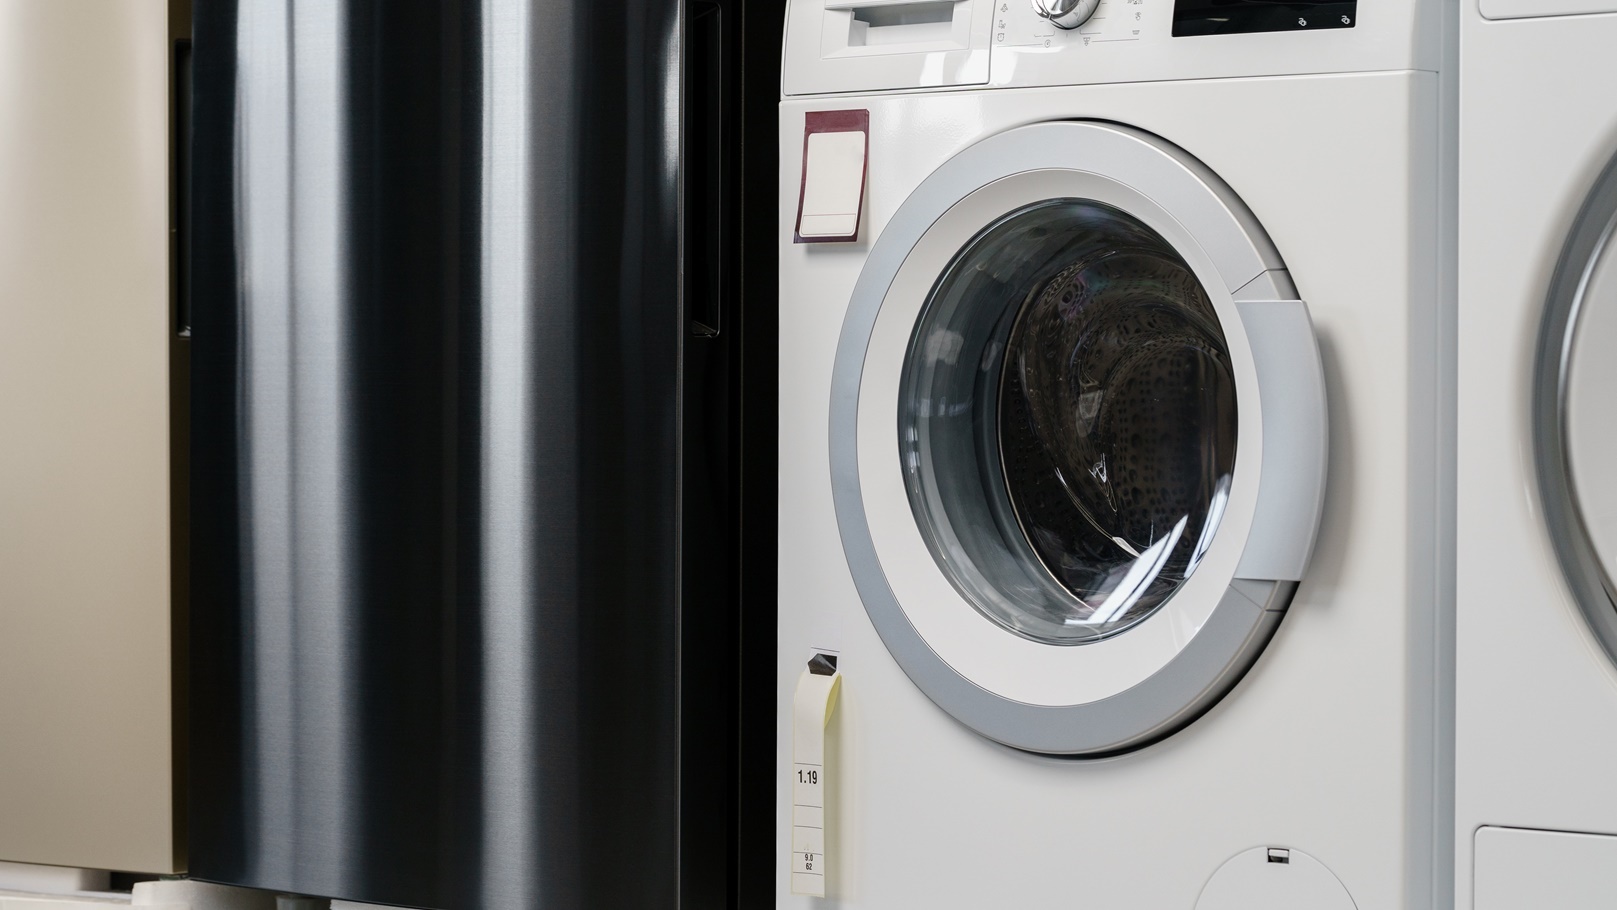 new-washing-machine-in-a-home-appliances-store-2021-09-04-03-46-45-utc